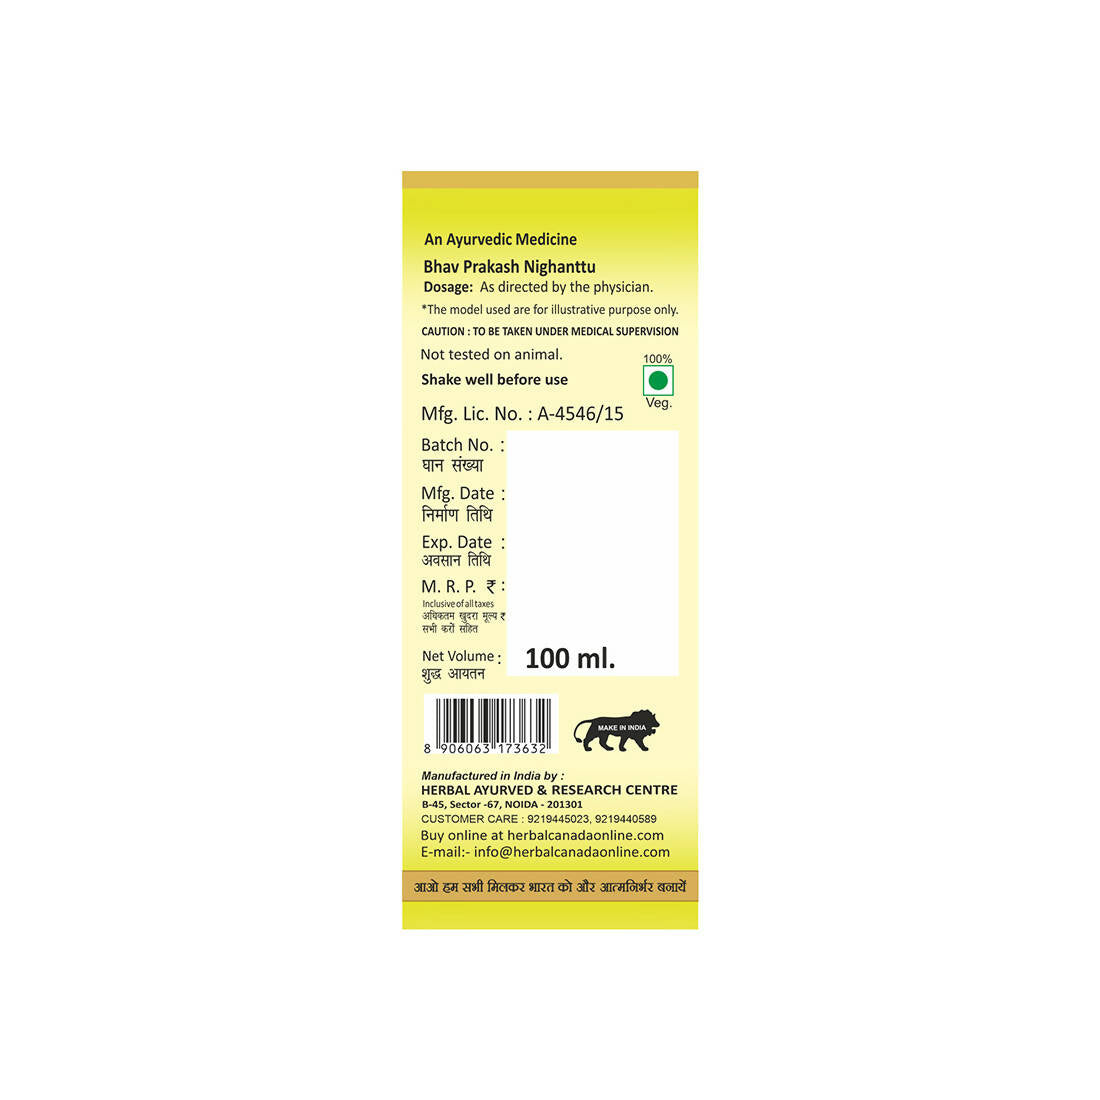 Herbal Canada Castor Oil (Arandi Oil) - Distacart